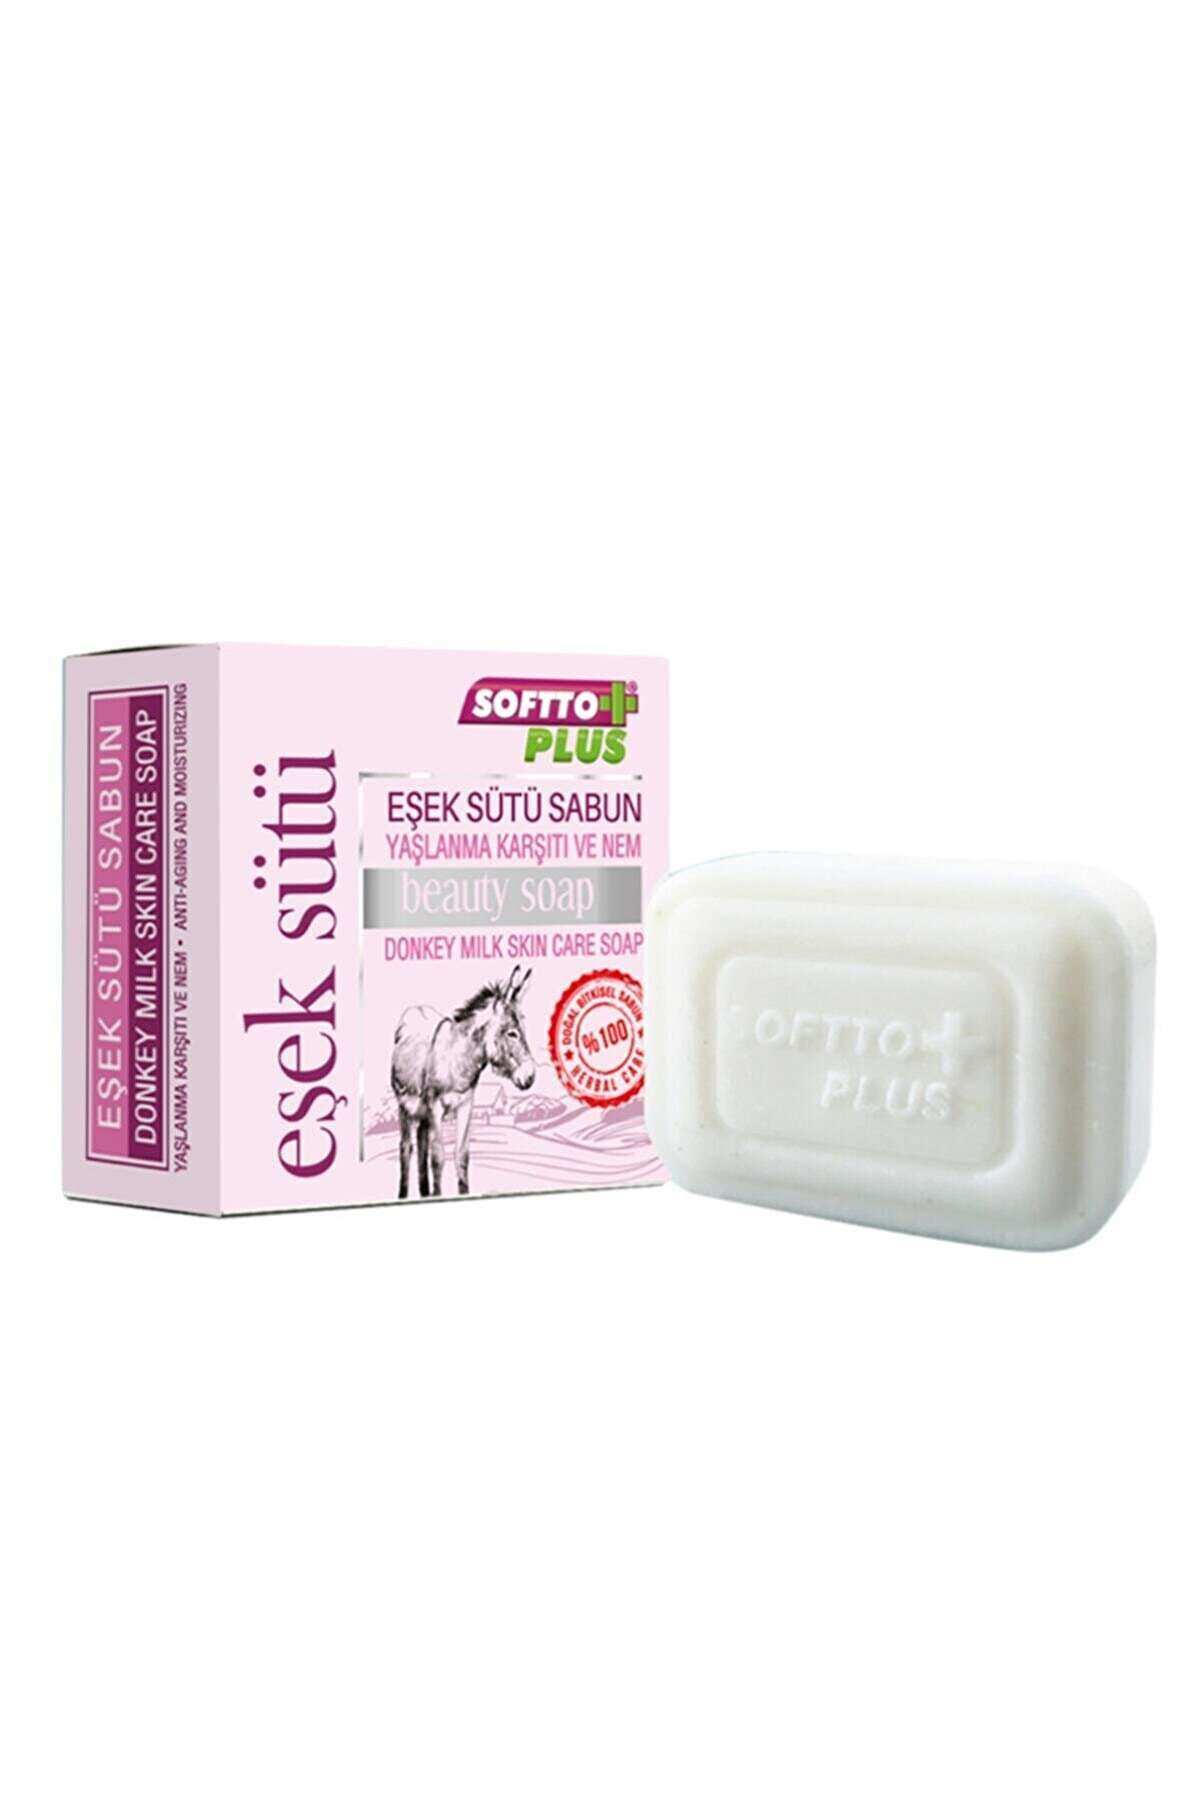 Softto Plus Eşek Sütlü Sabun 200 ml